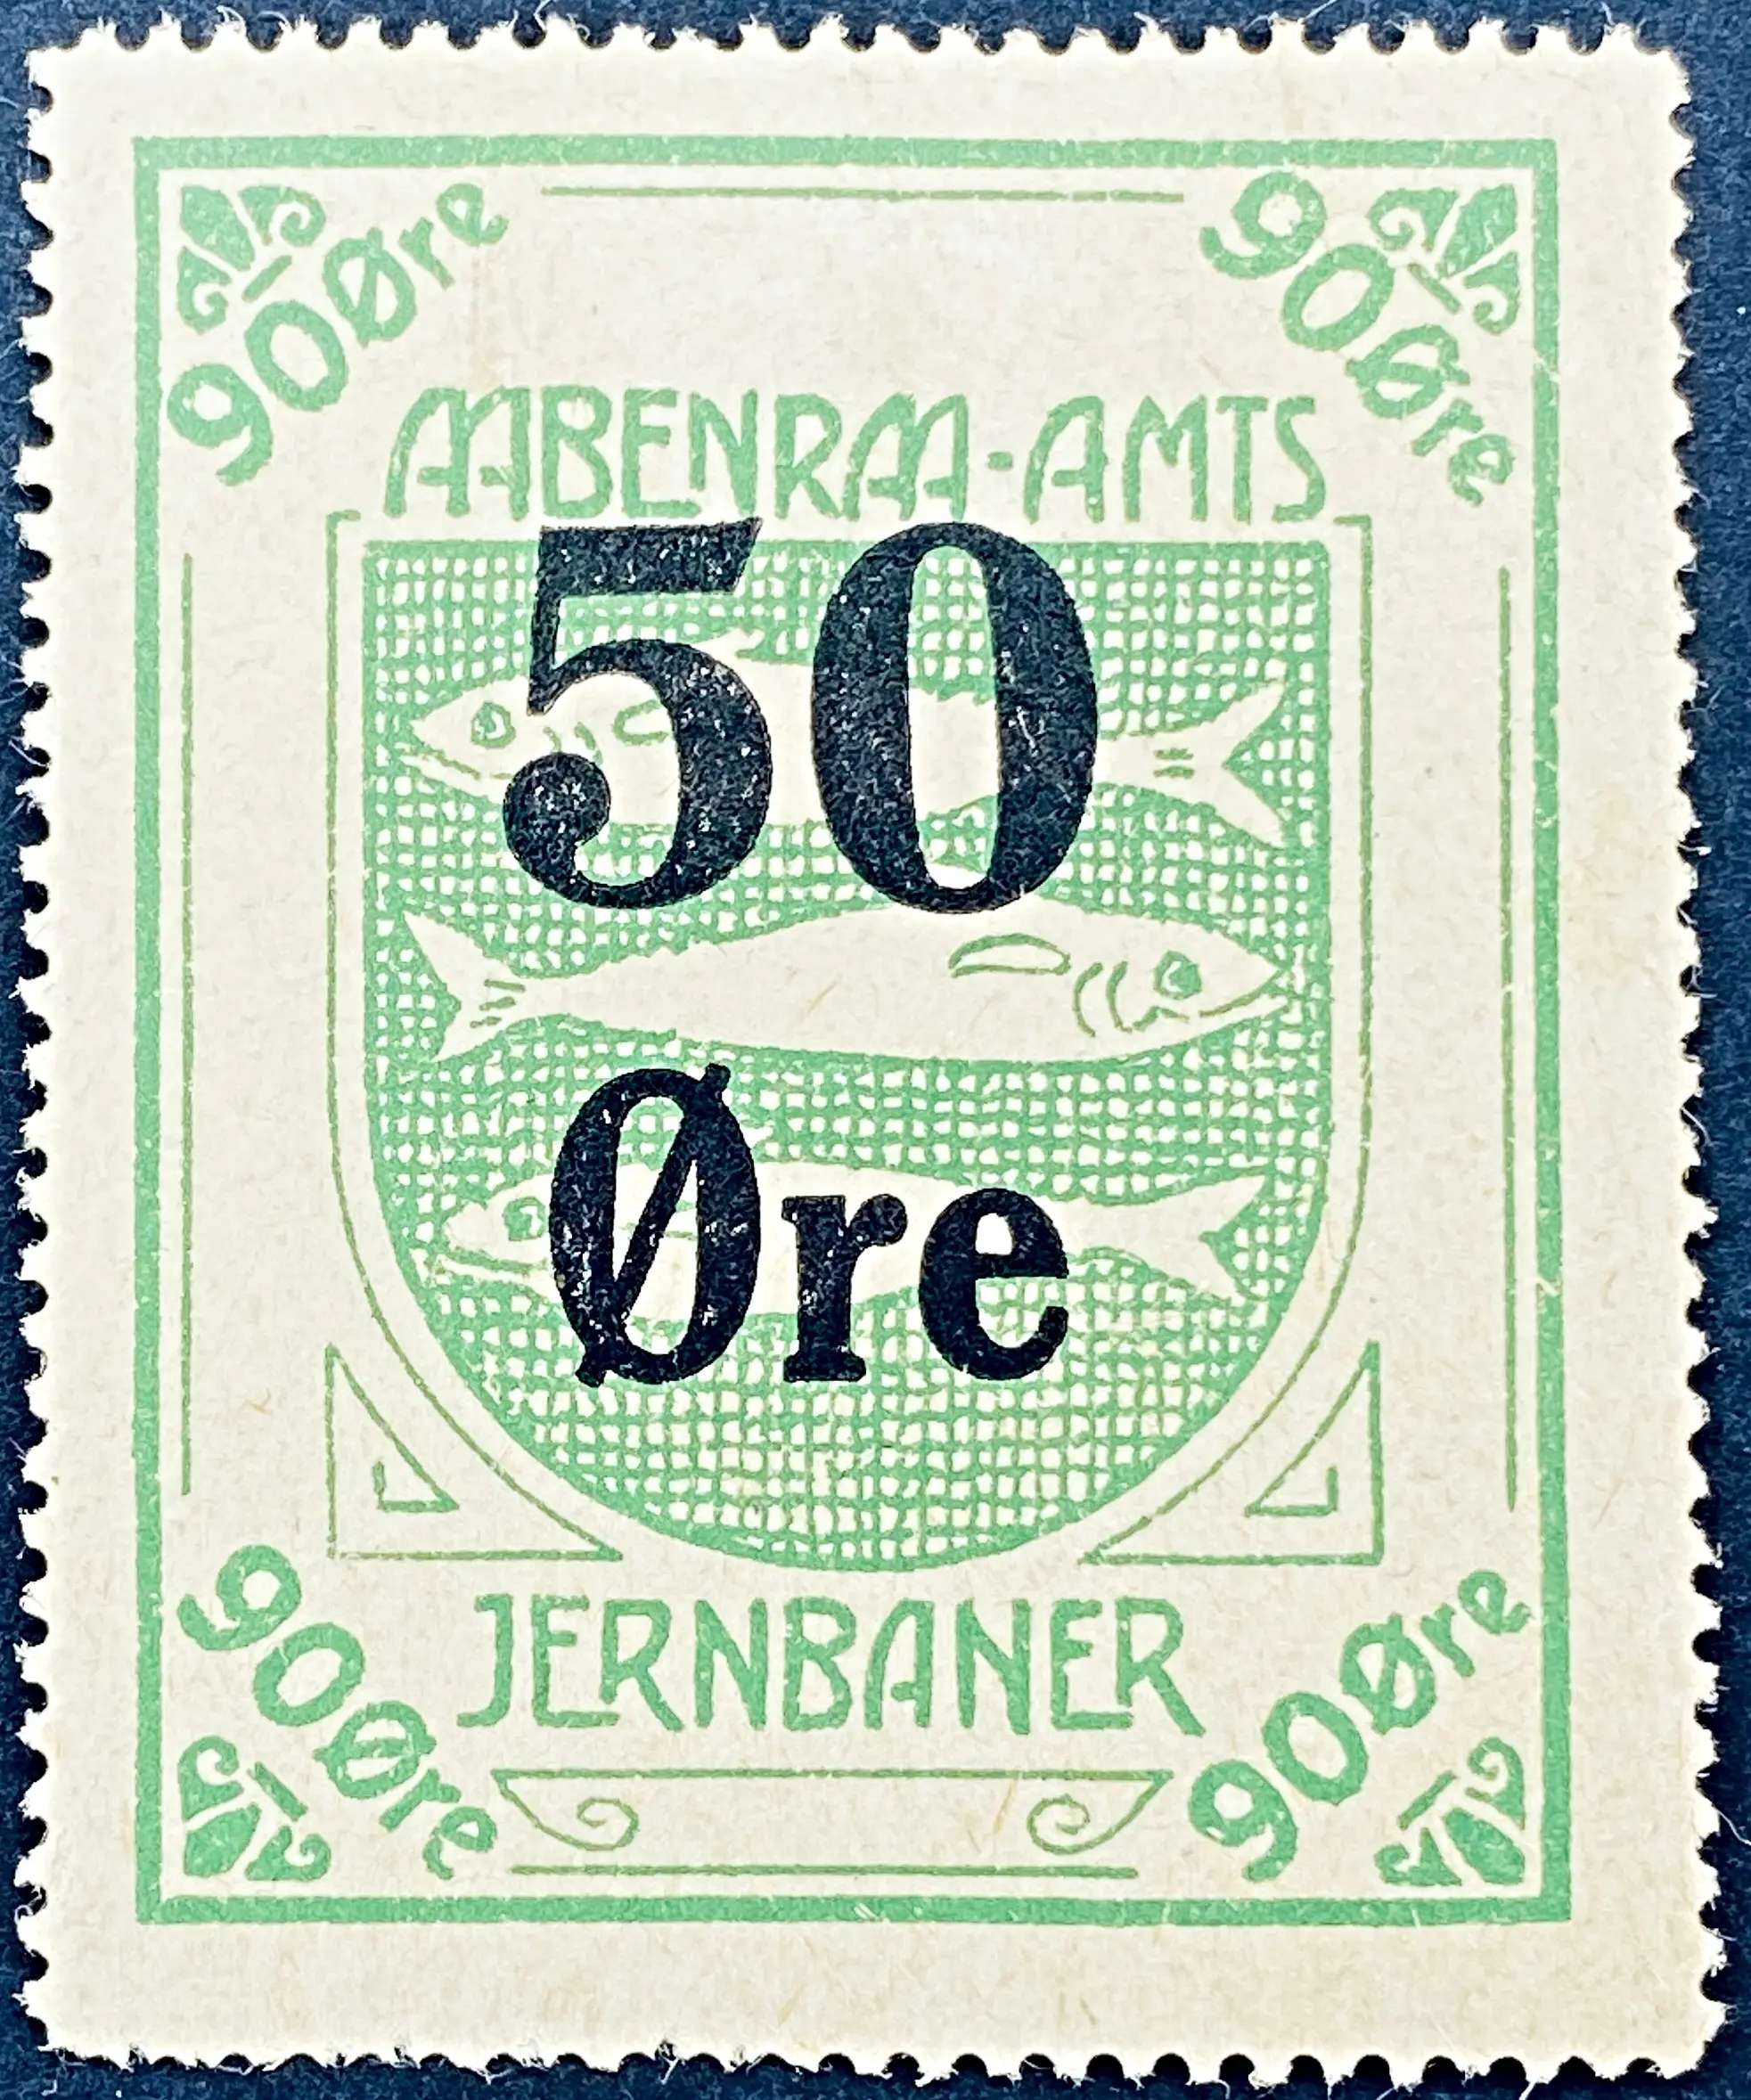 AaAJ 4K - Provisorium (overtryk) 50 Øre sort bogtryk på 90 Øre Motiv: Aabenraa våbenskjold - Grøn.